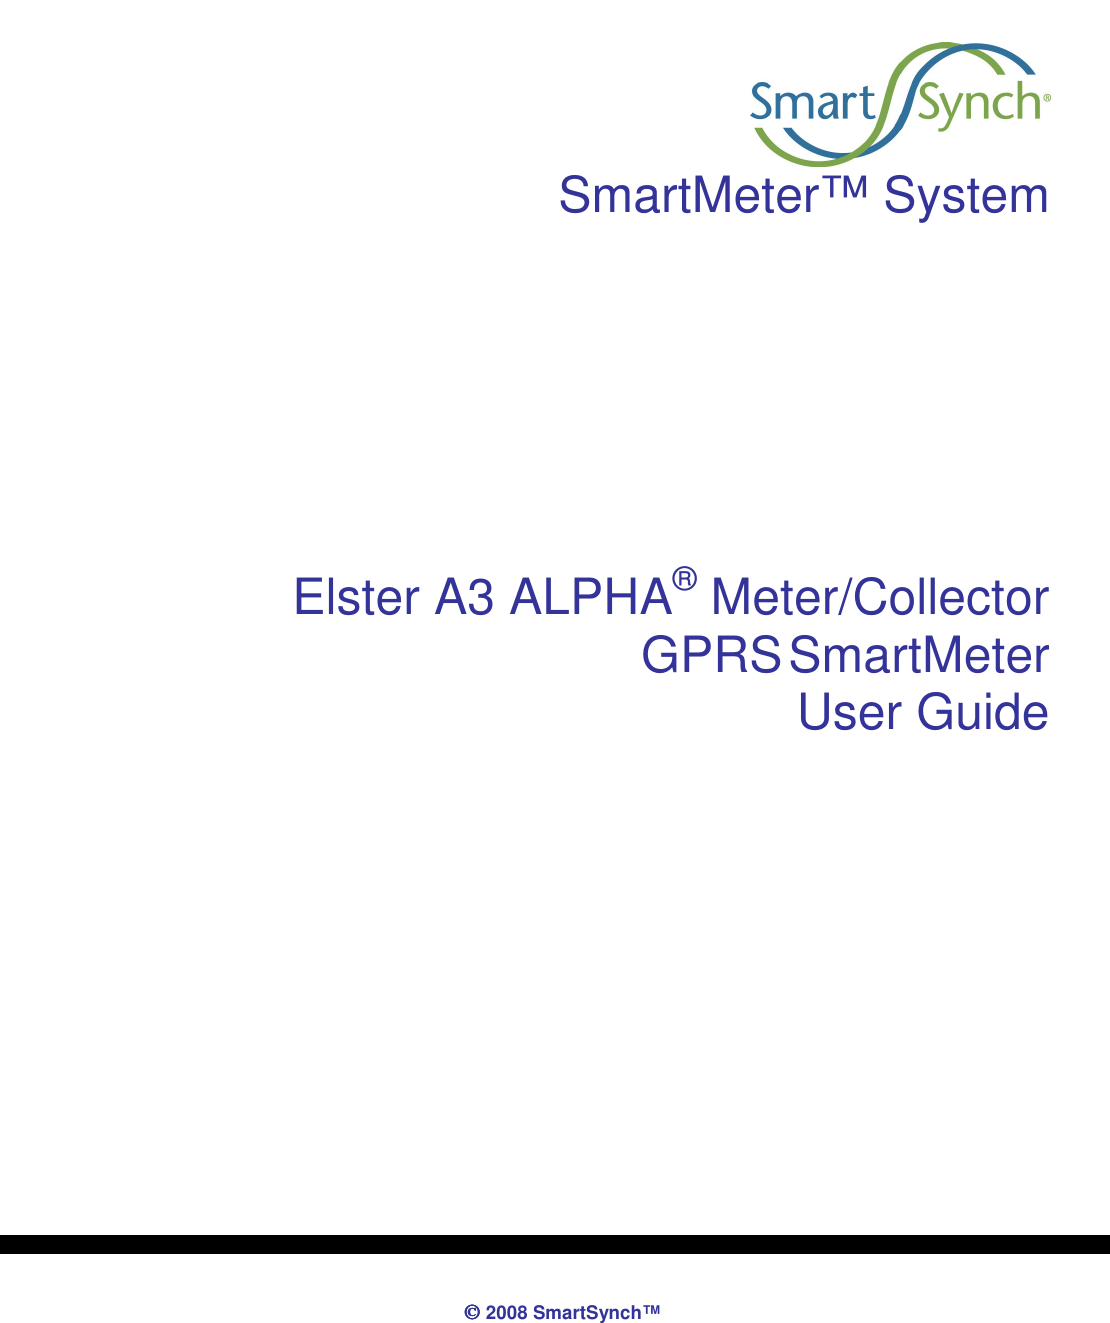               2008 SmartSynch™     SmartMeter™ System       Elster A3 ALPHA® Meter/Collector GPRS SmartMeter User Guide         